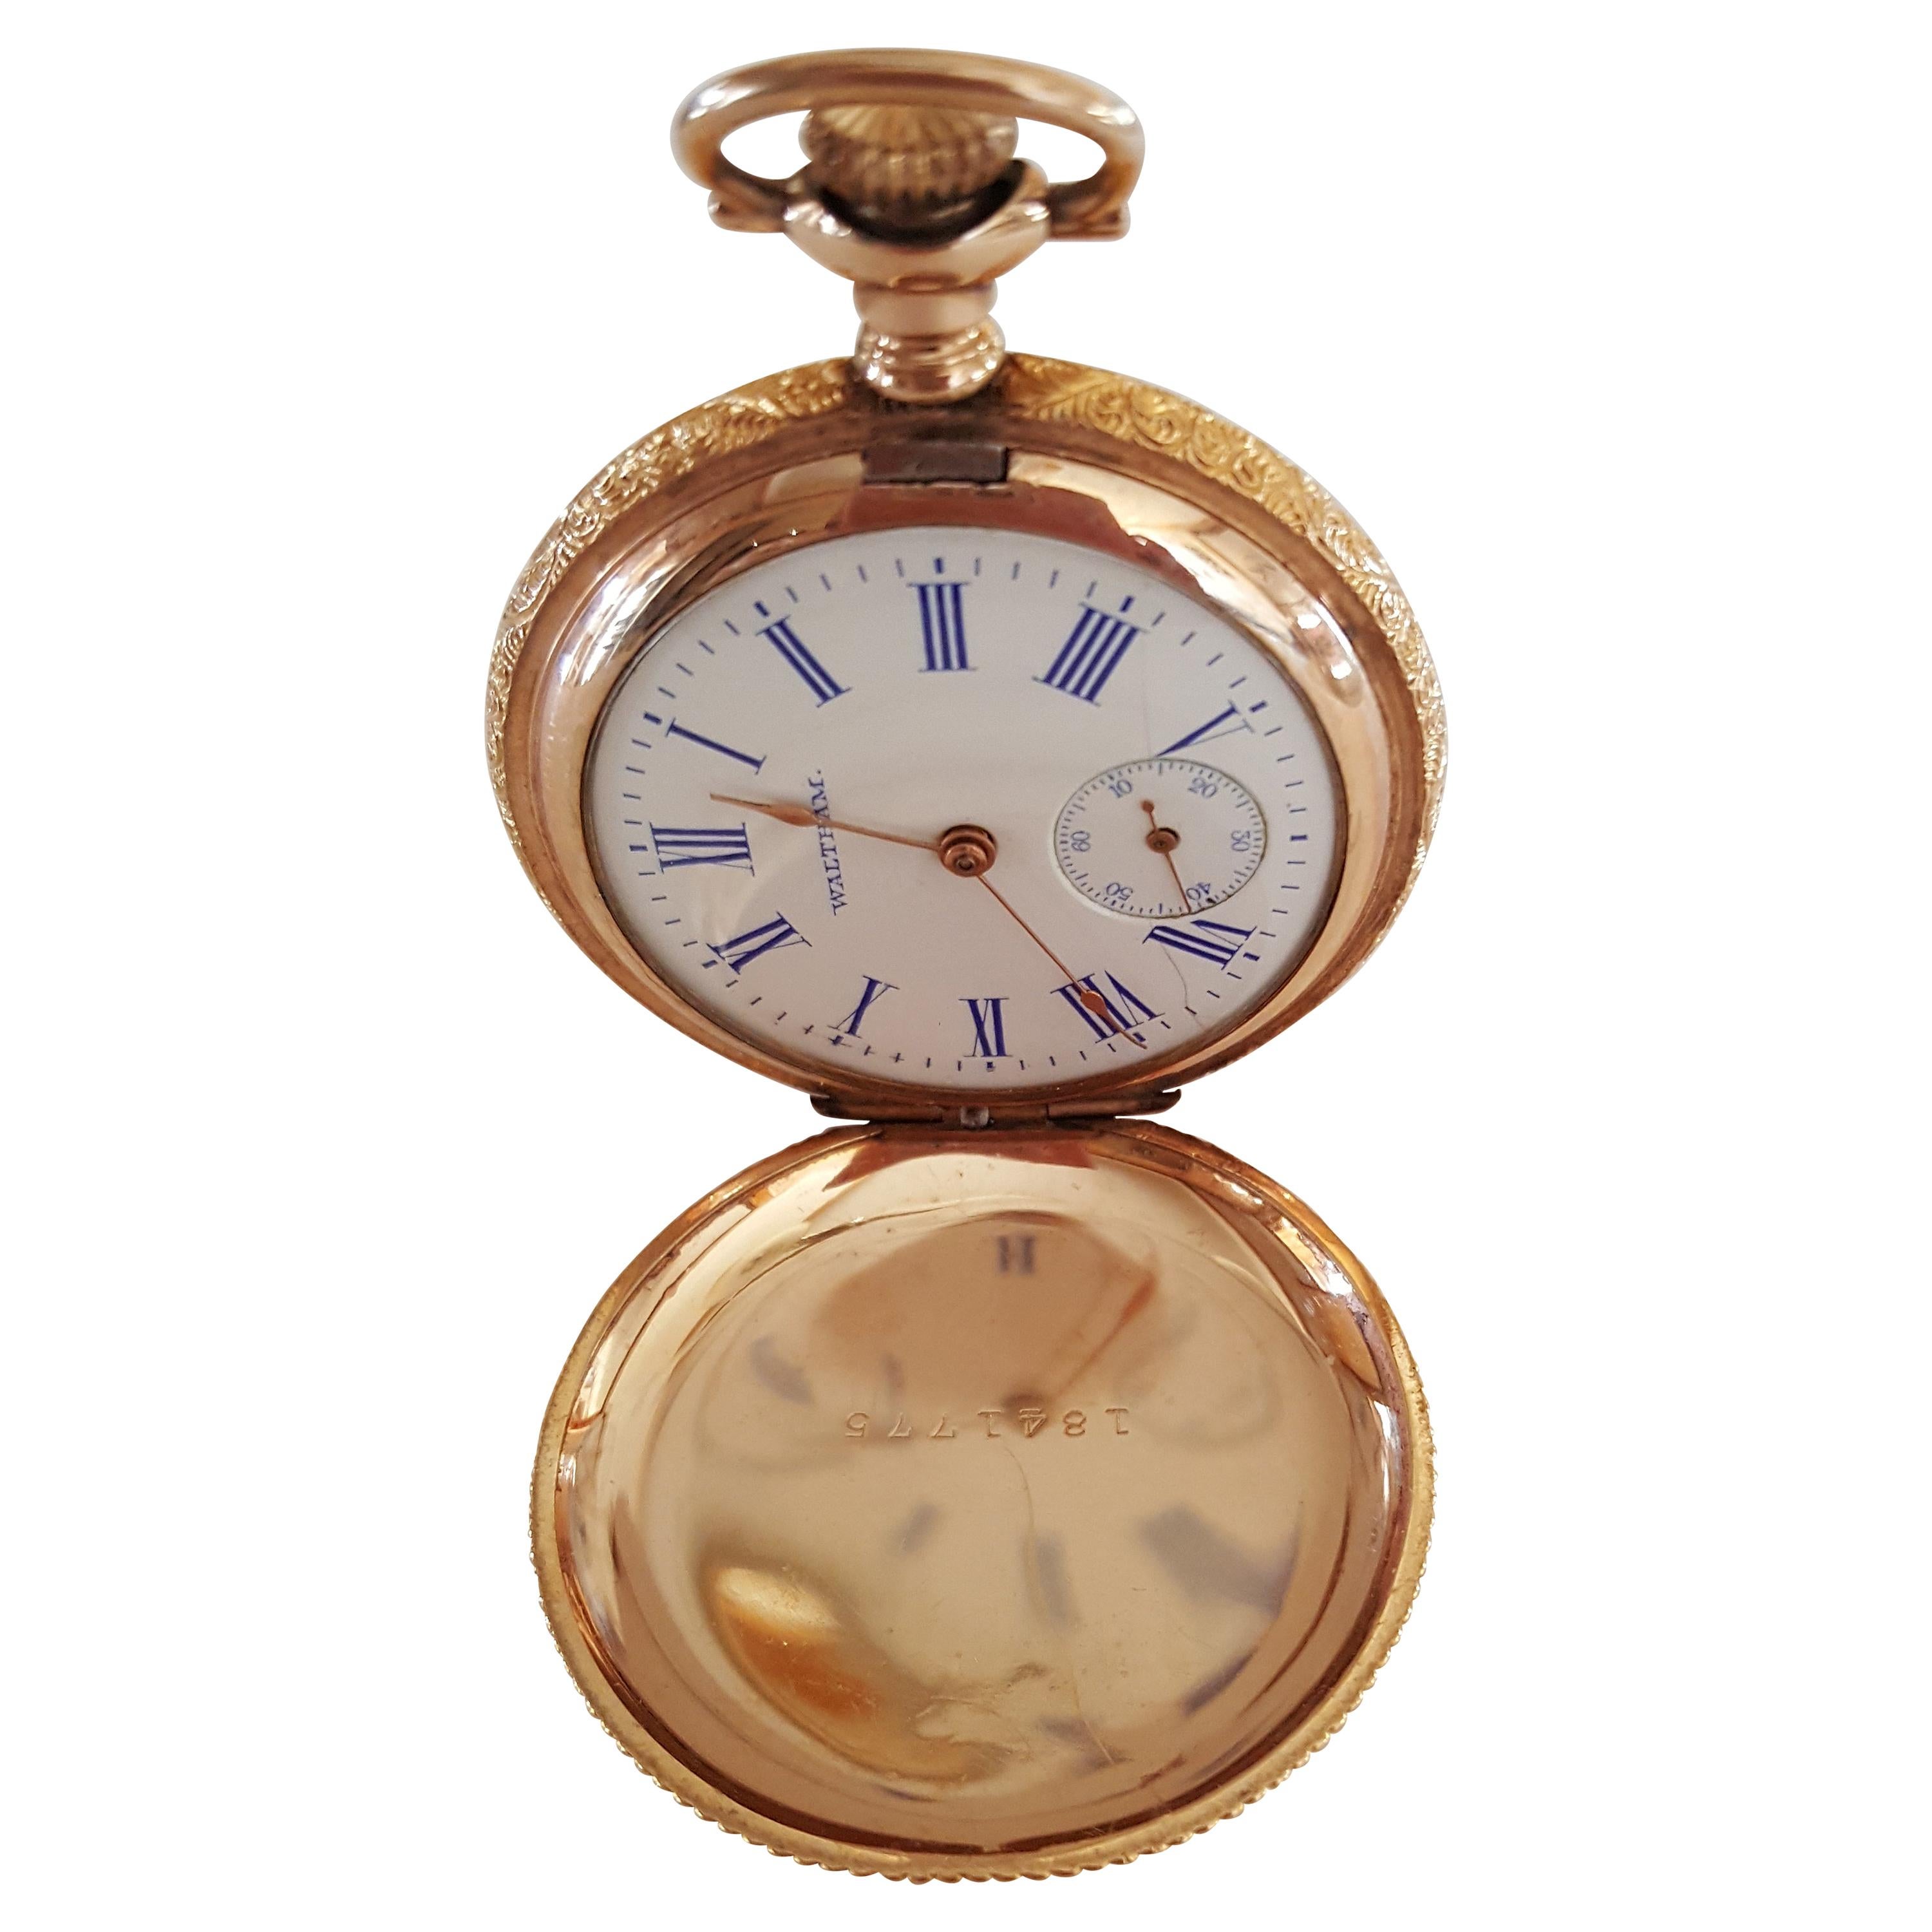 Vintage Waltham Pocket Watch, Gold Filled, Working, Pristine, 1907, 15 Jewel